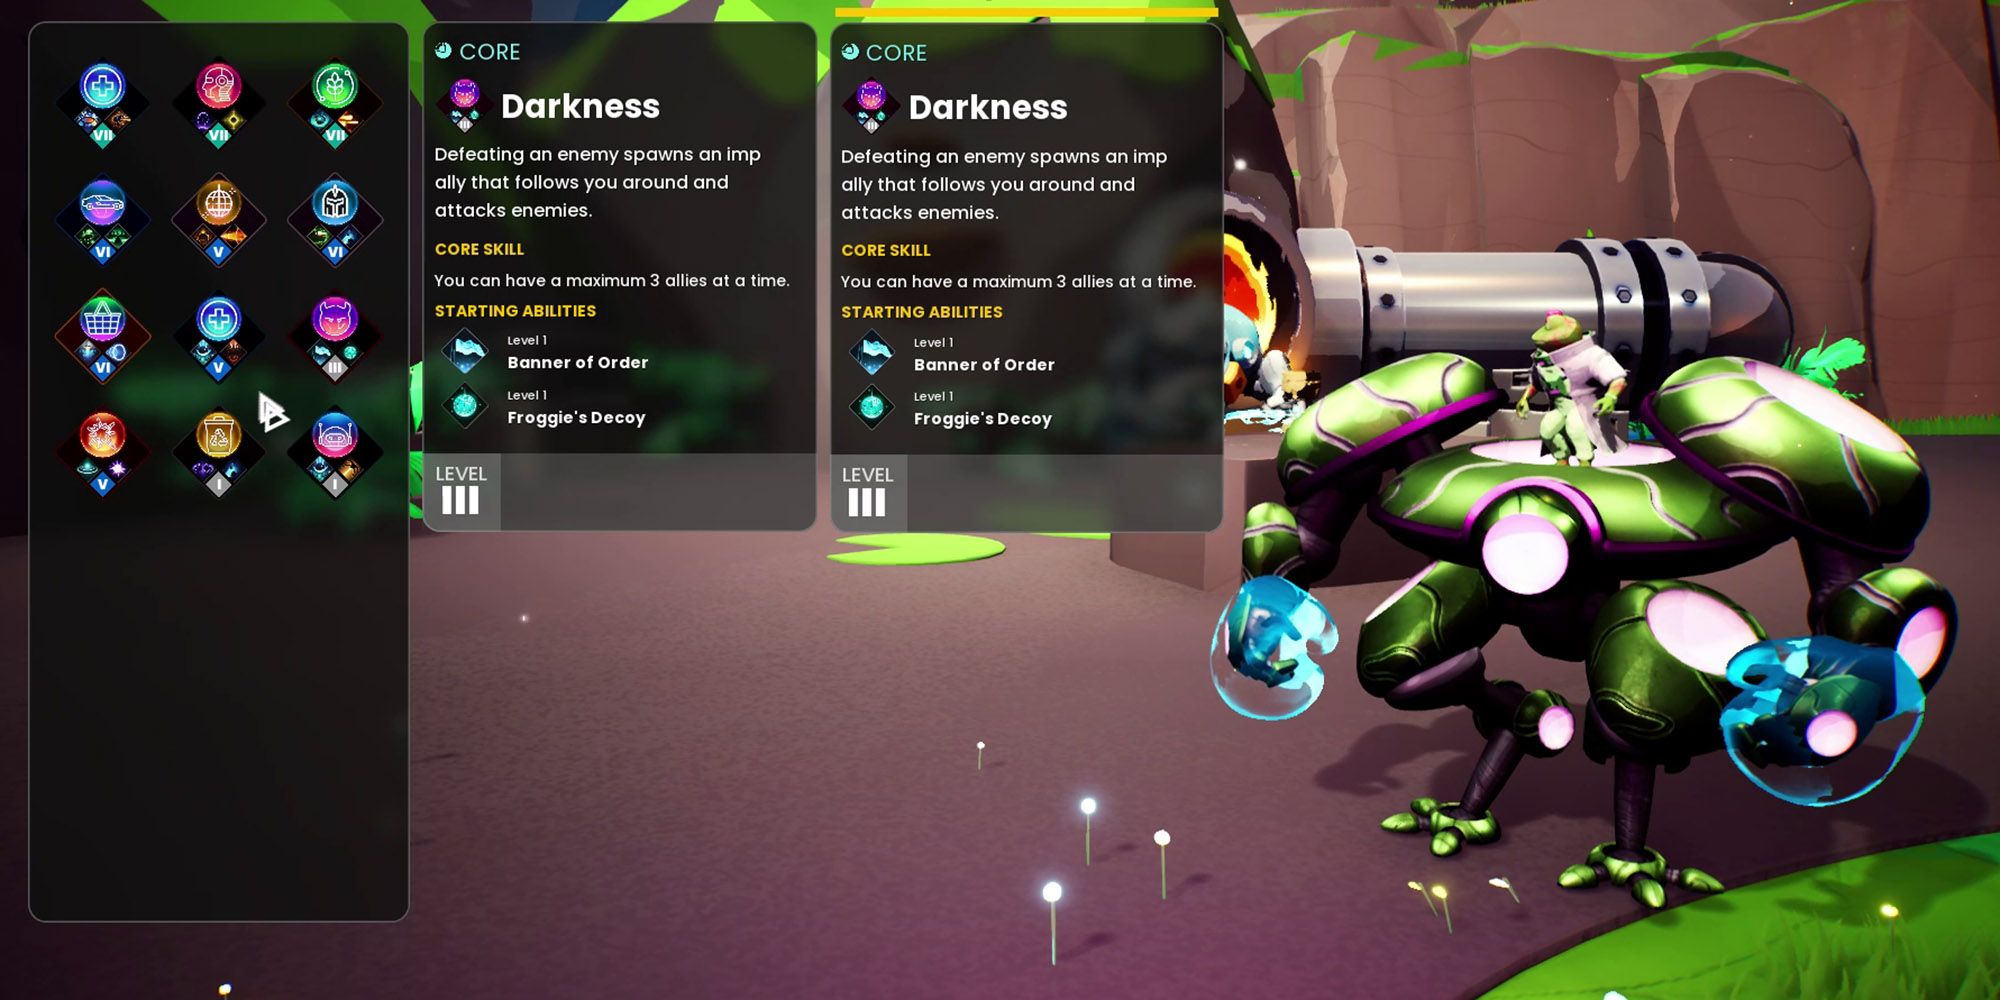 Shoulders Of Giants - Darkness GERM Core Description In-Game